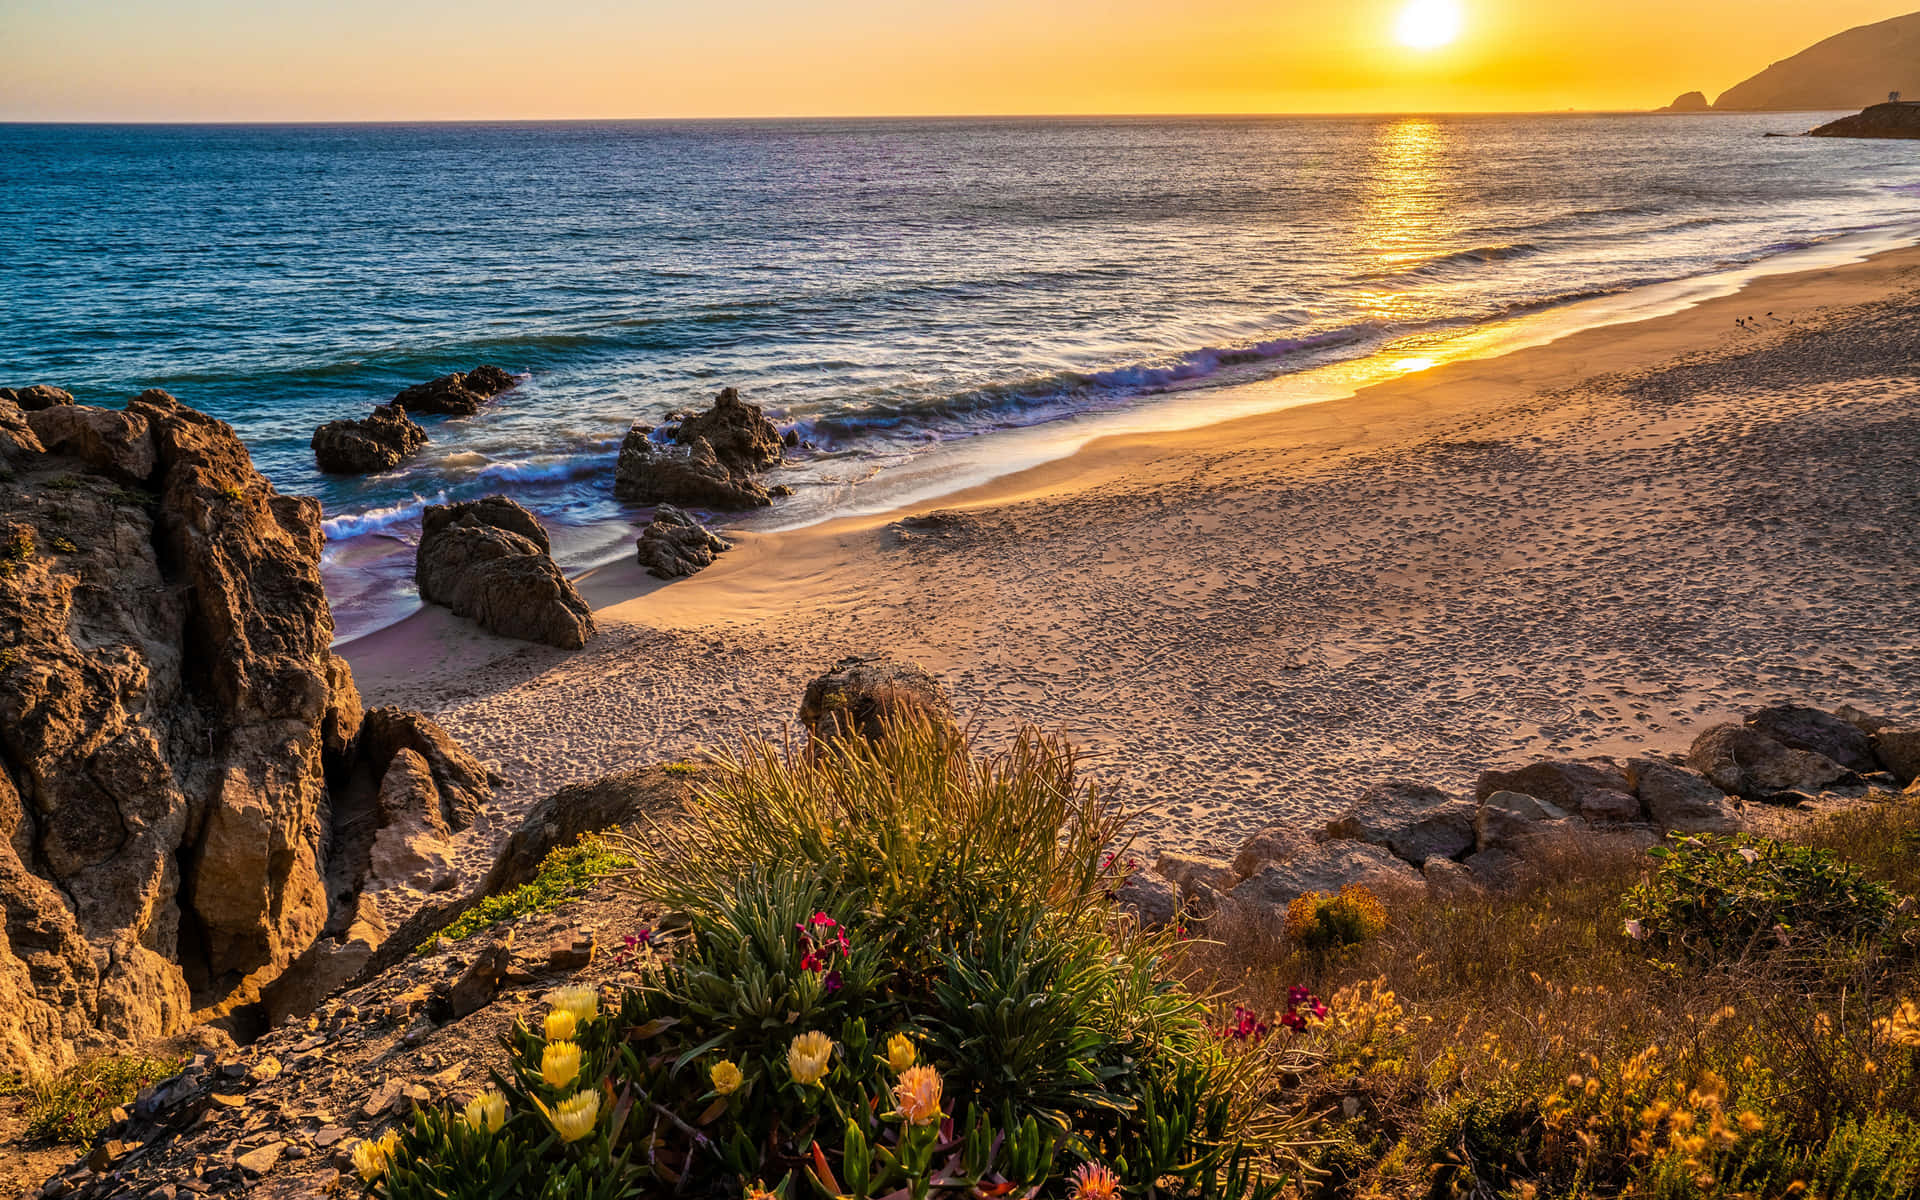 Enjoy the peaceful beauty of a Malibu Beach sunrise. Wallpaper